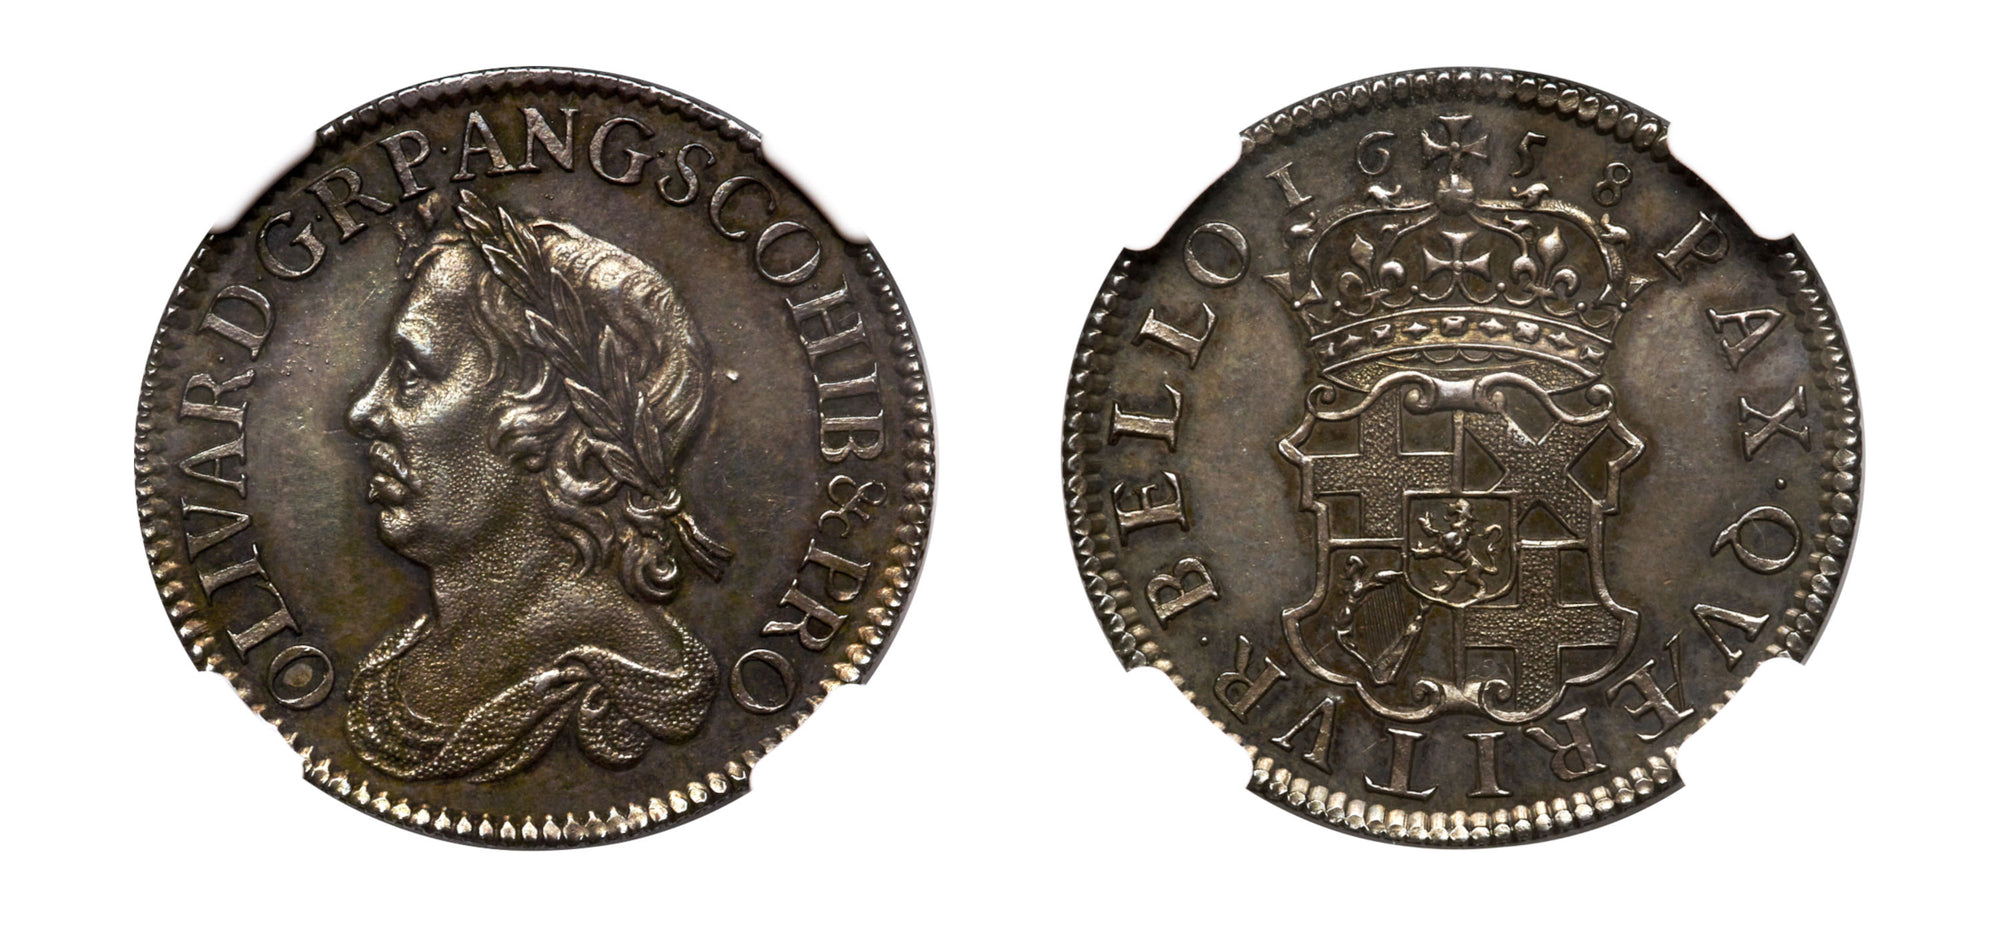 1658 Oliver Cromwell Shilling NGC MS64 - Hard Asset Management, Inc